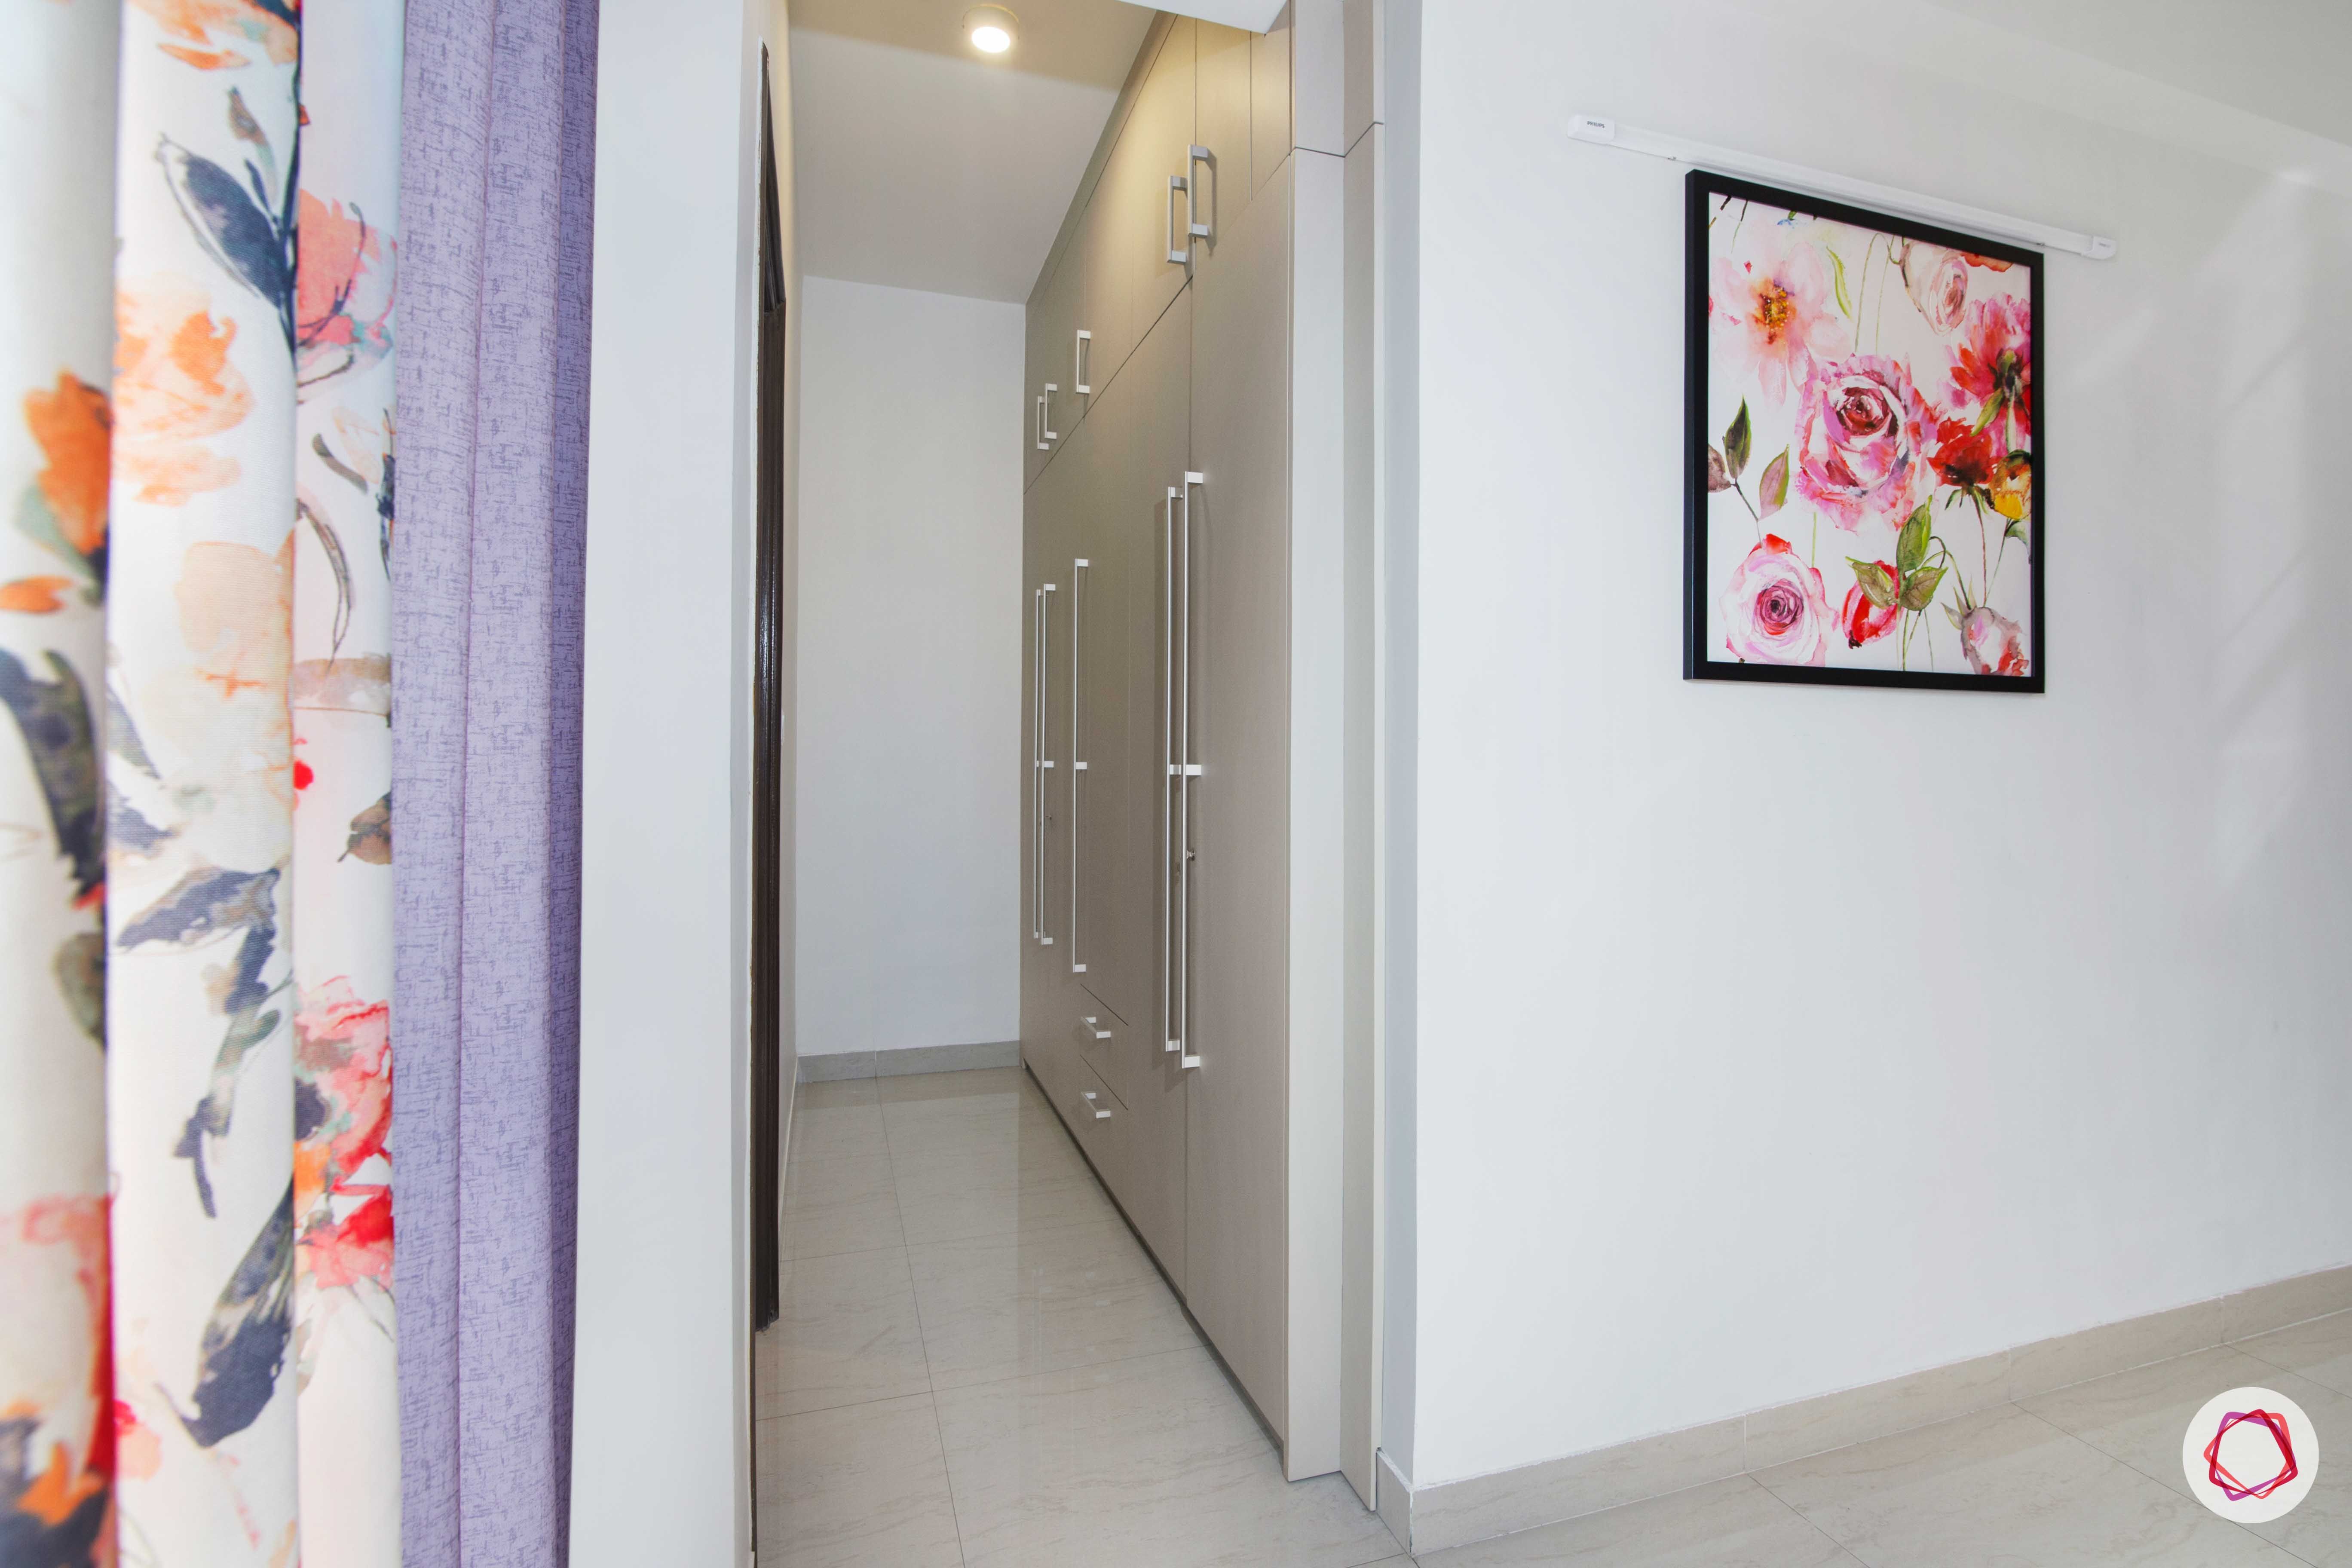 3 bedroom flat design-walk-in cabinet for girls room-dressing room ideas for girls-grey laminate cabinet